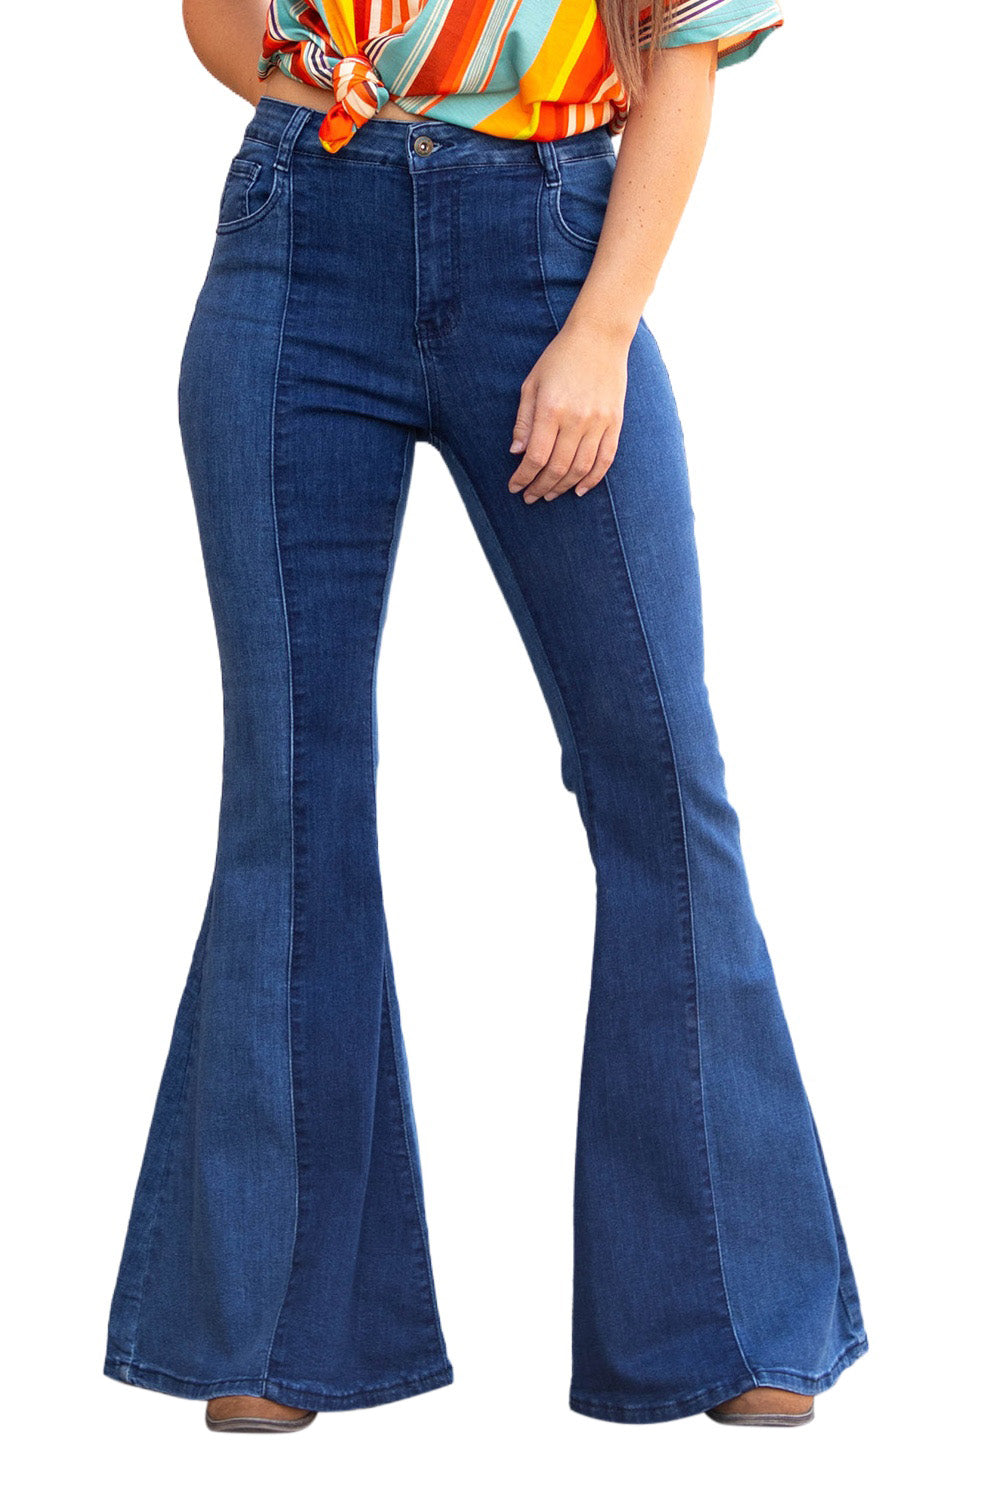 Blue Boho Two Tone Extreme Flare Jeans Jeans JT's Designer Fashion